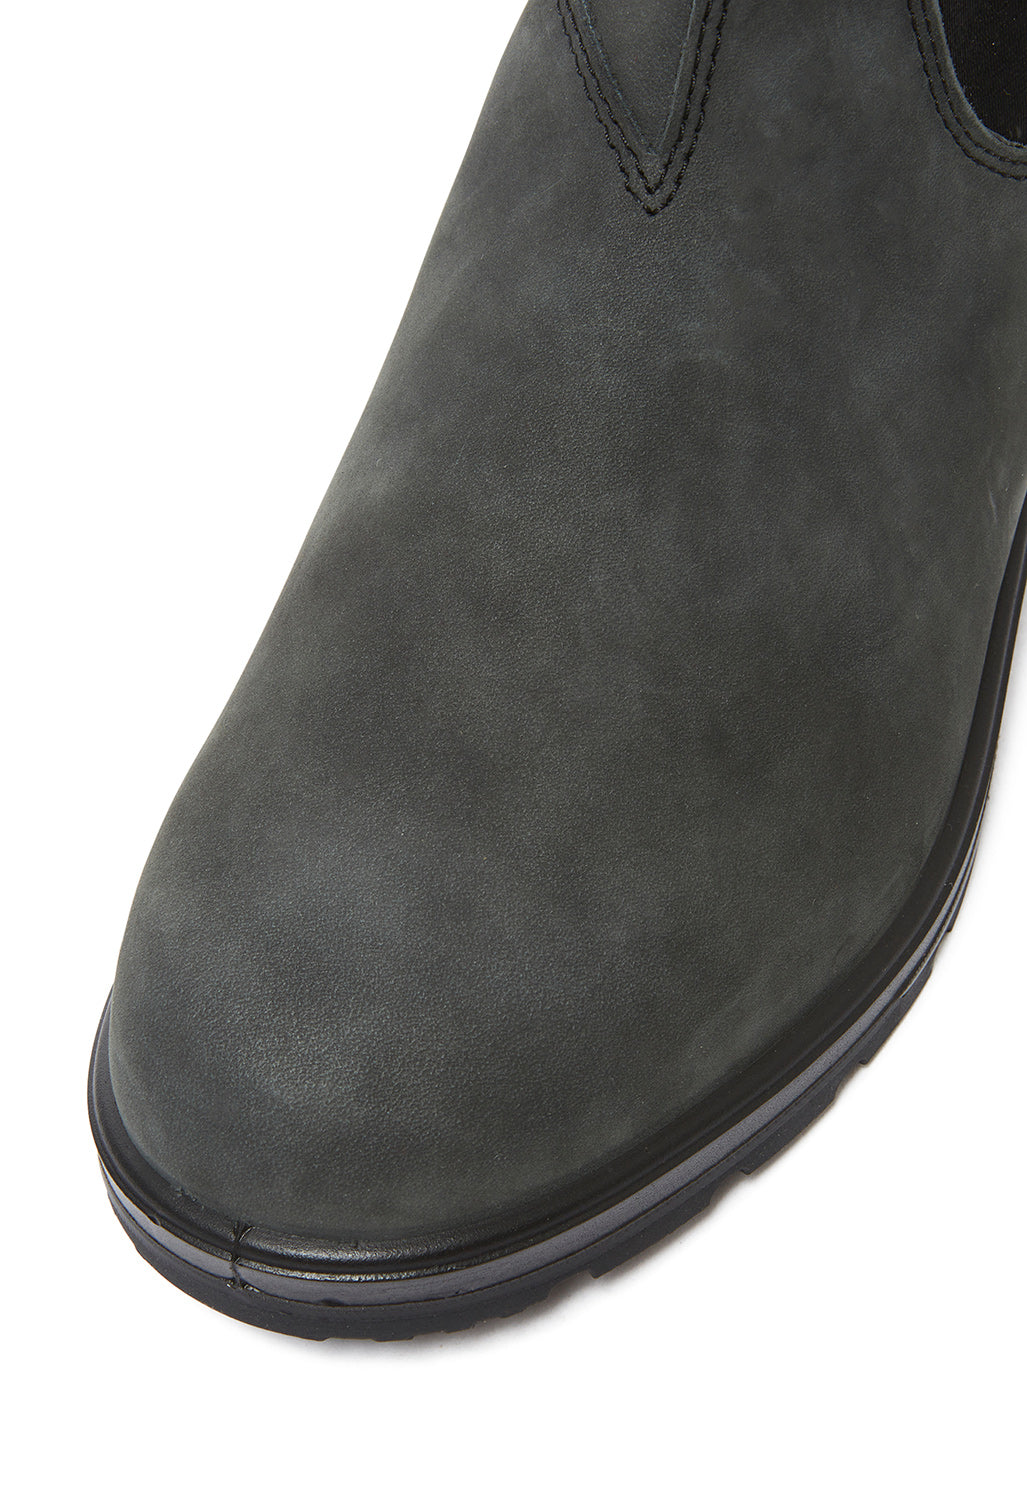 Blundstone 1478 Boots - Rustic Black